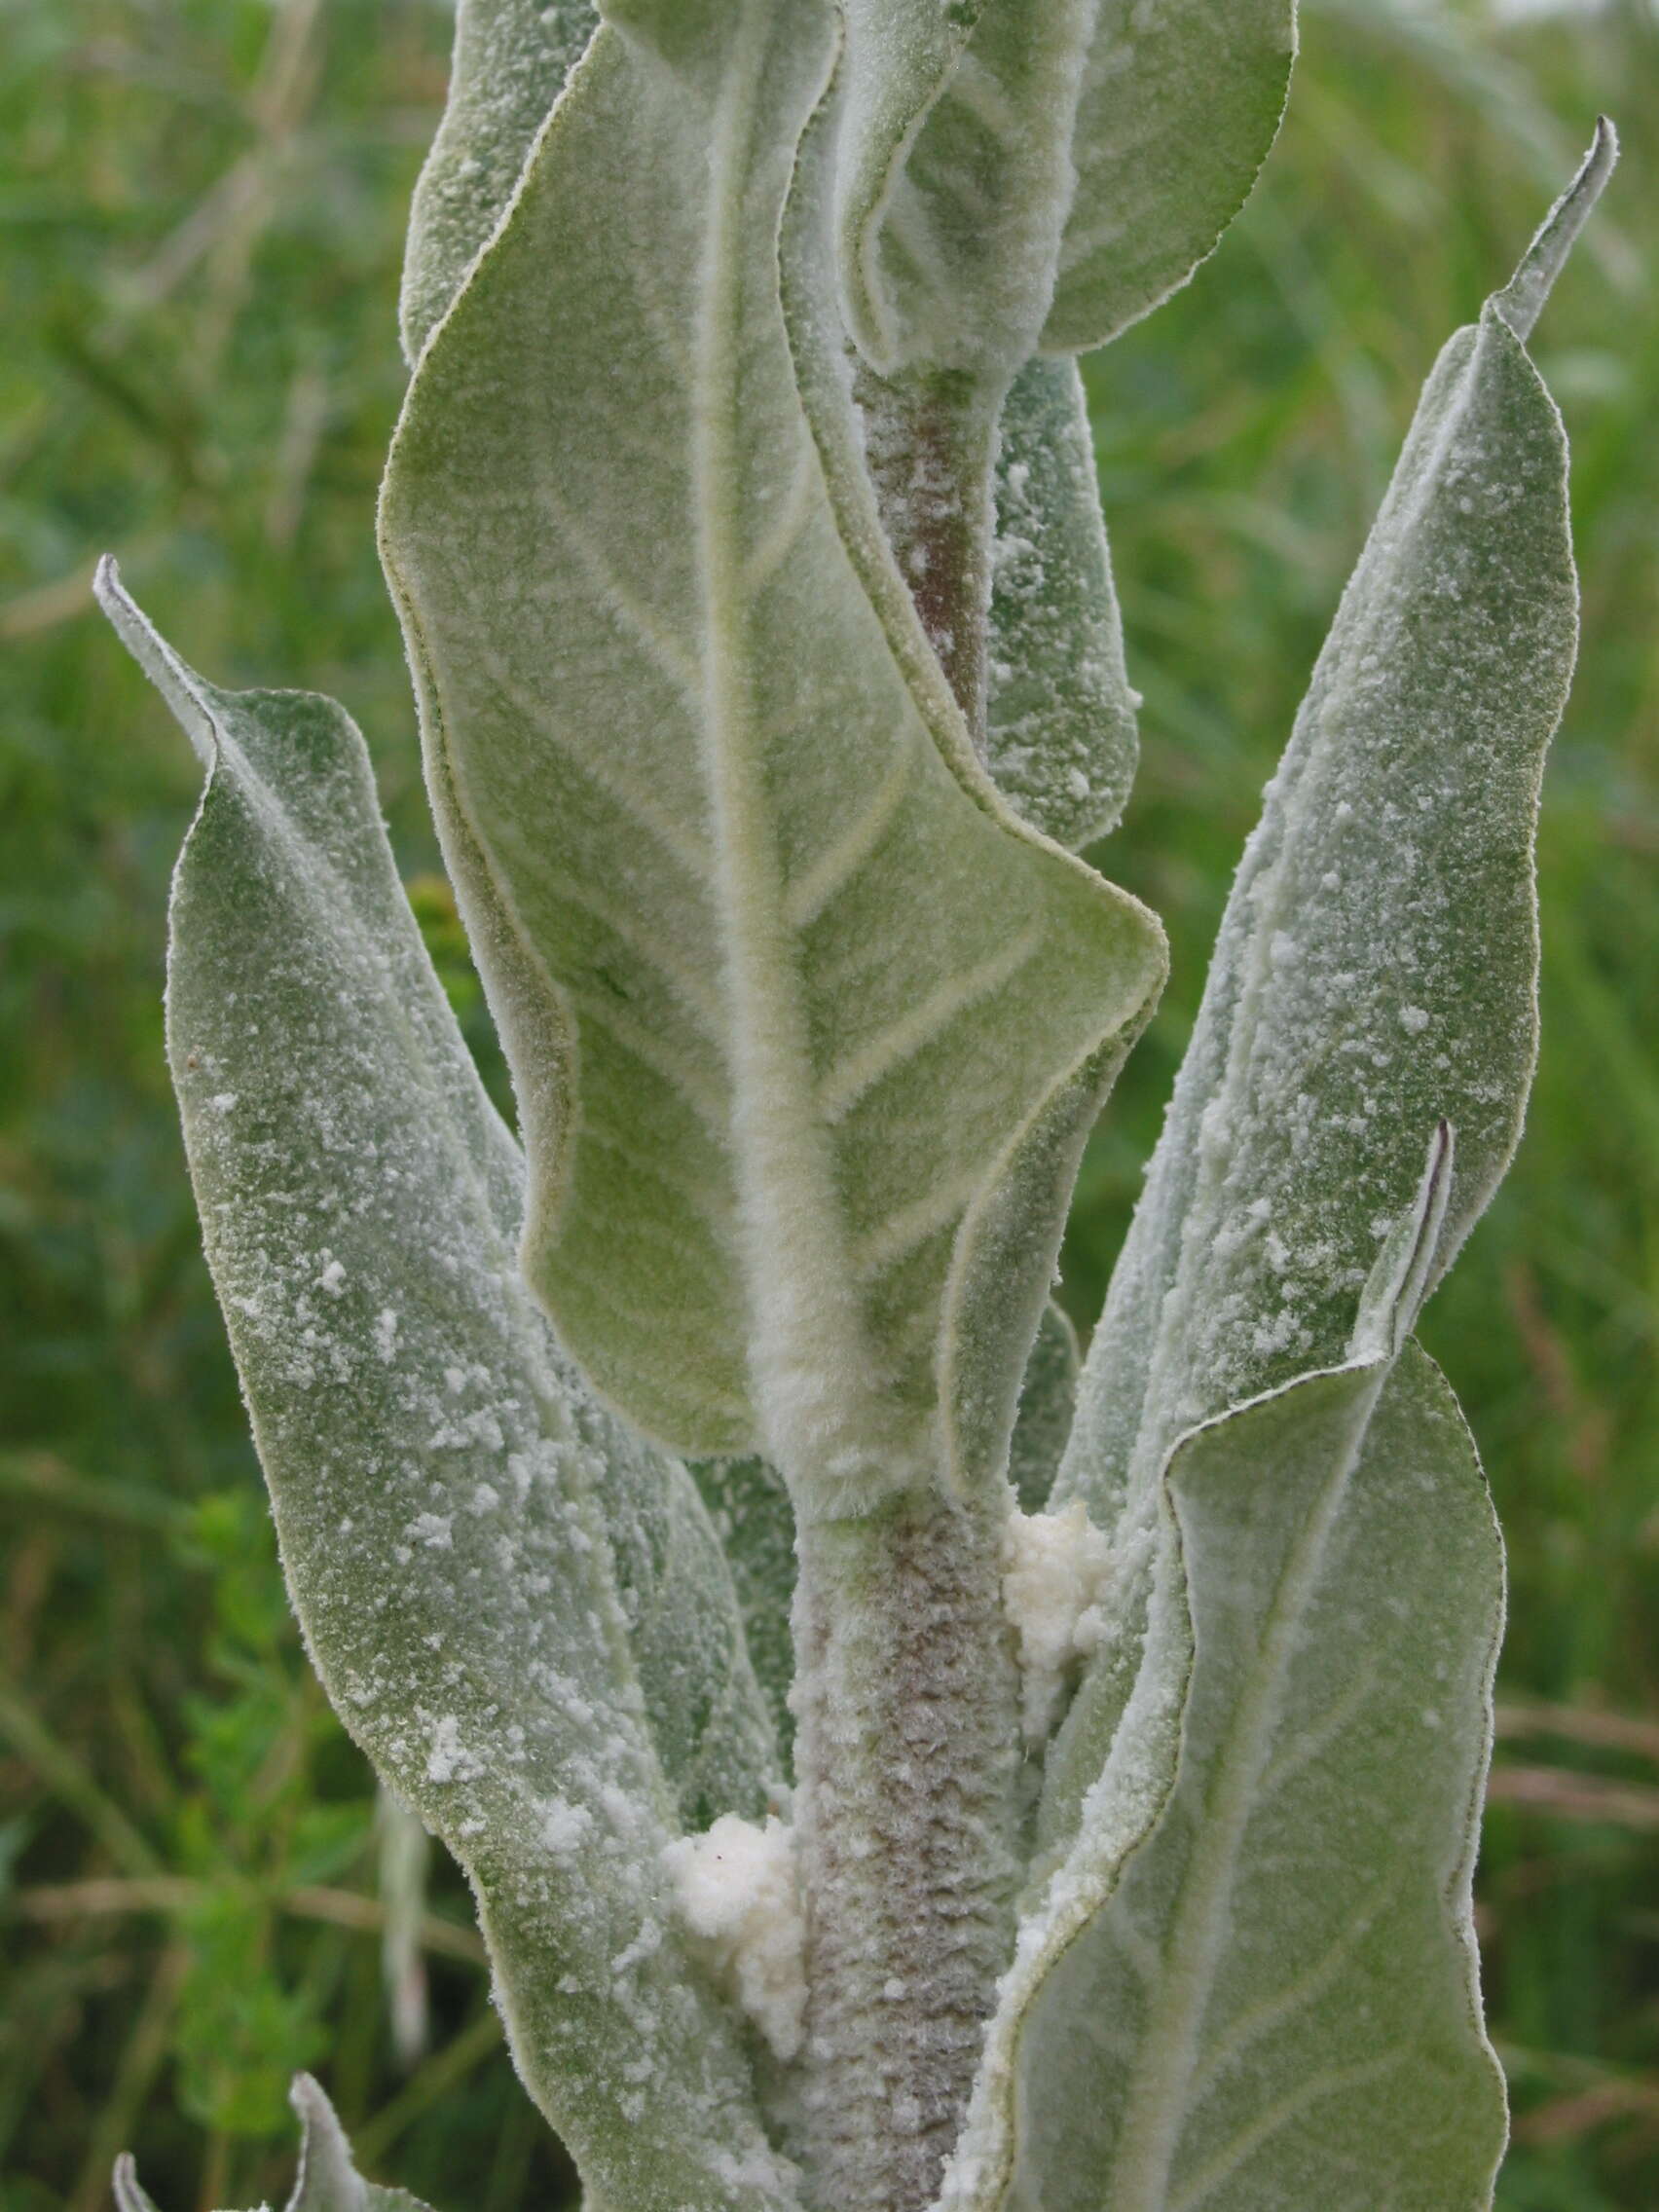 Image of broad-leaf mullein